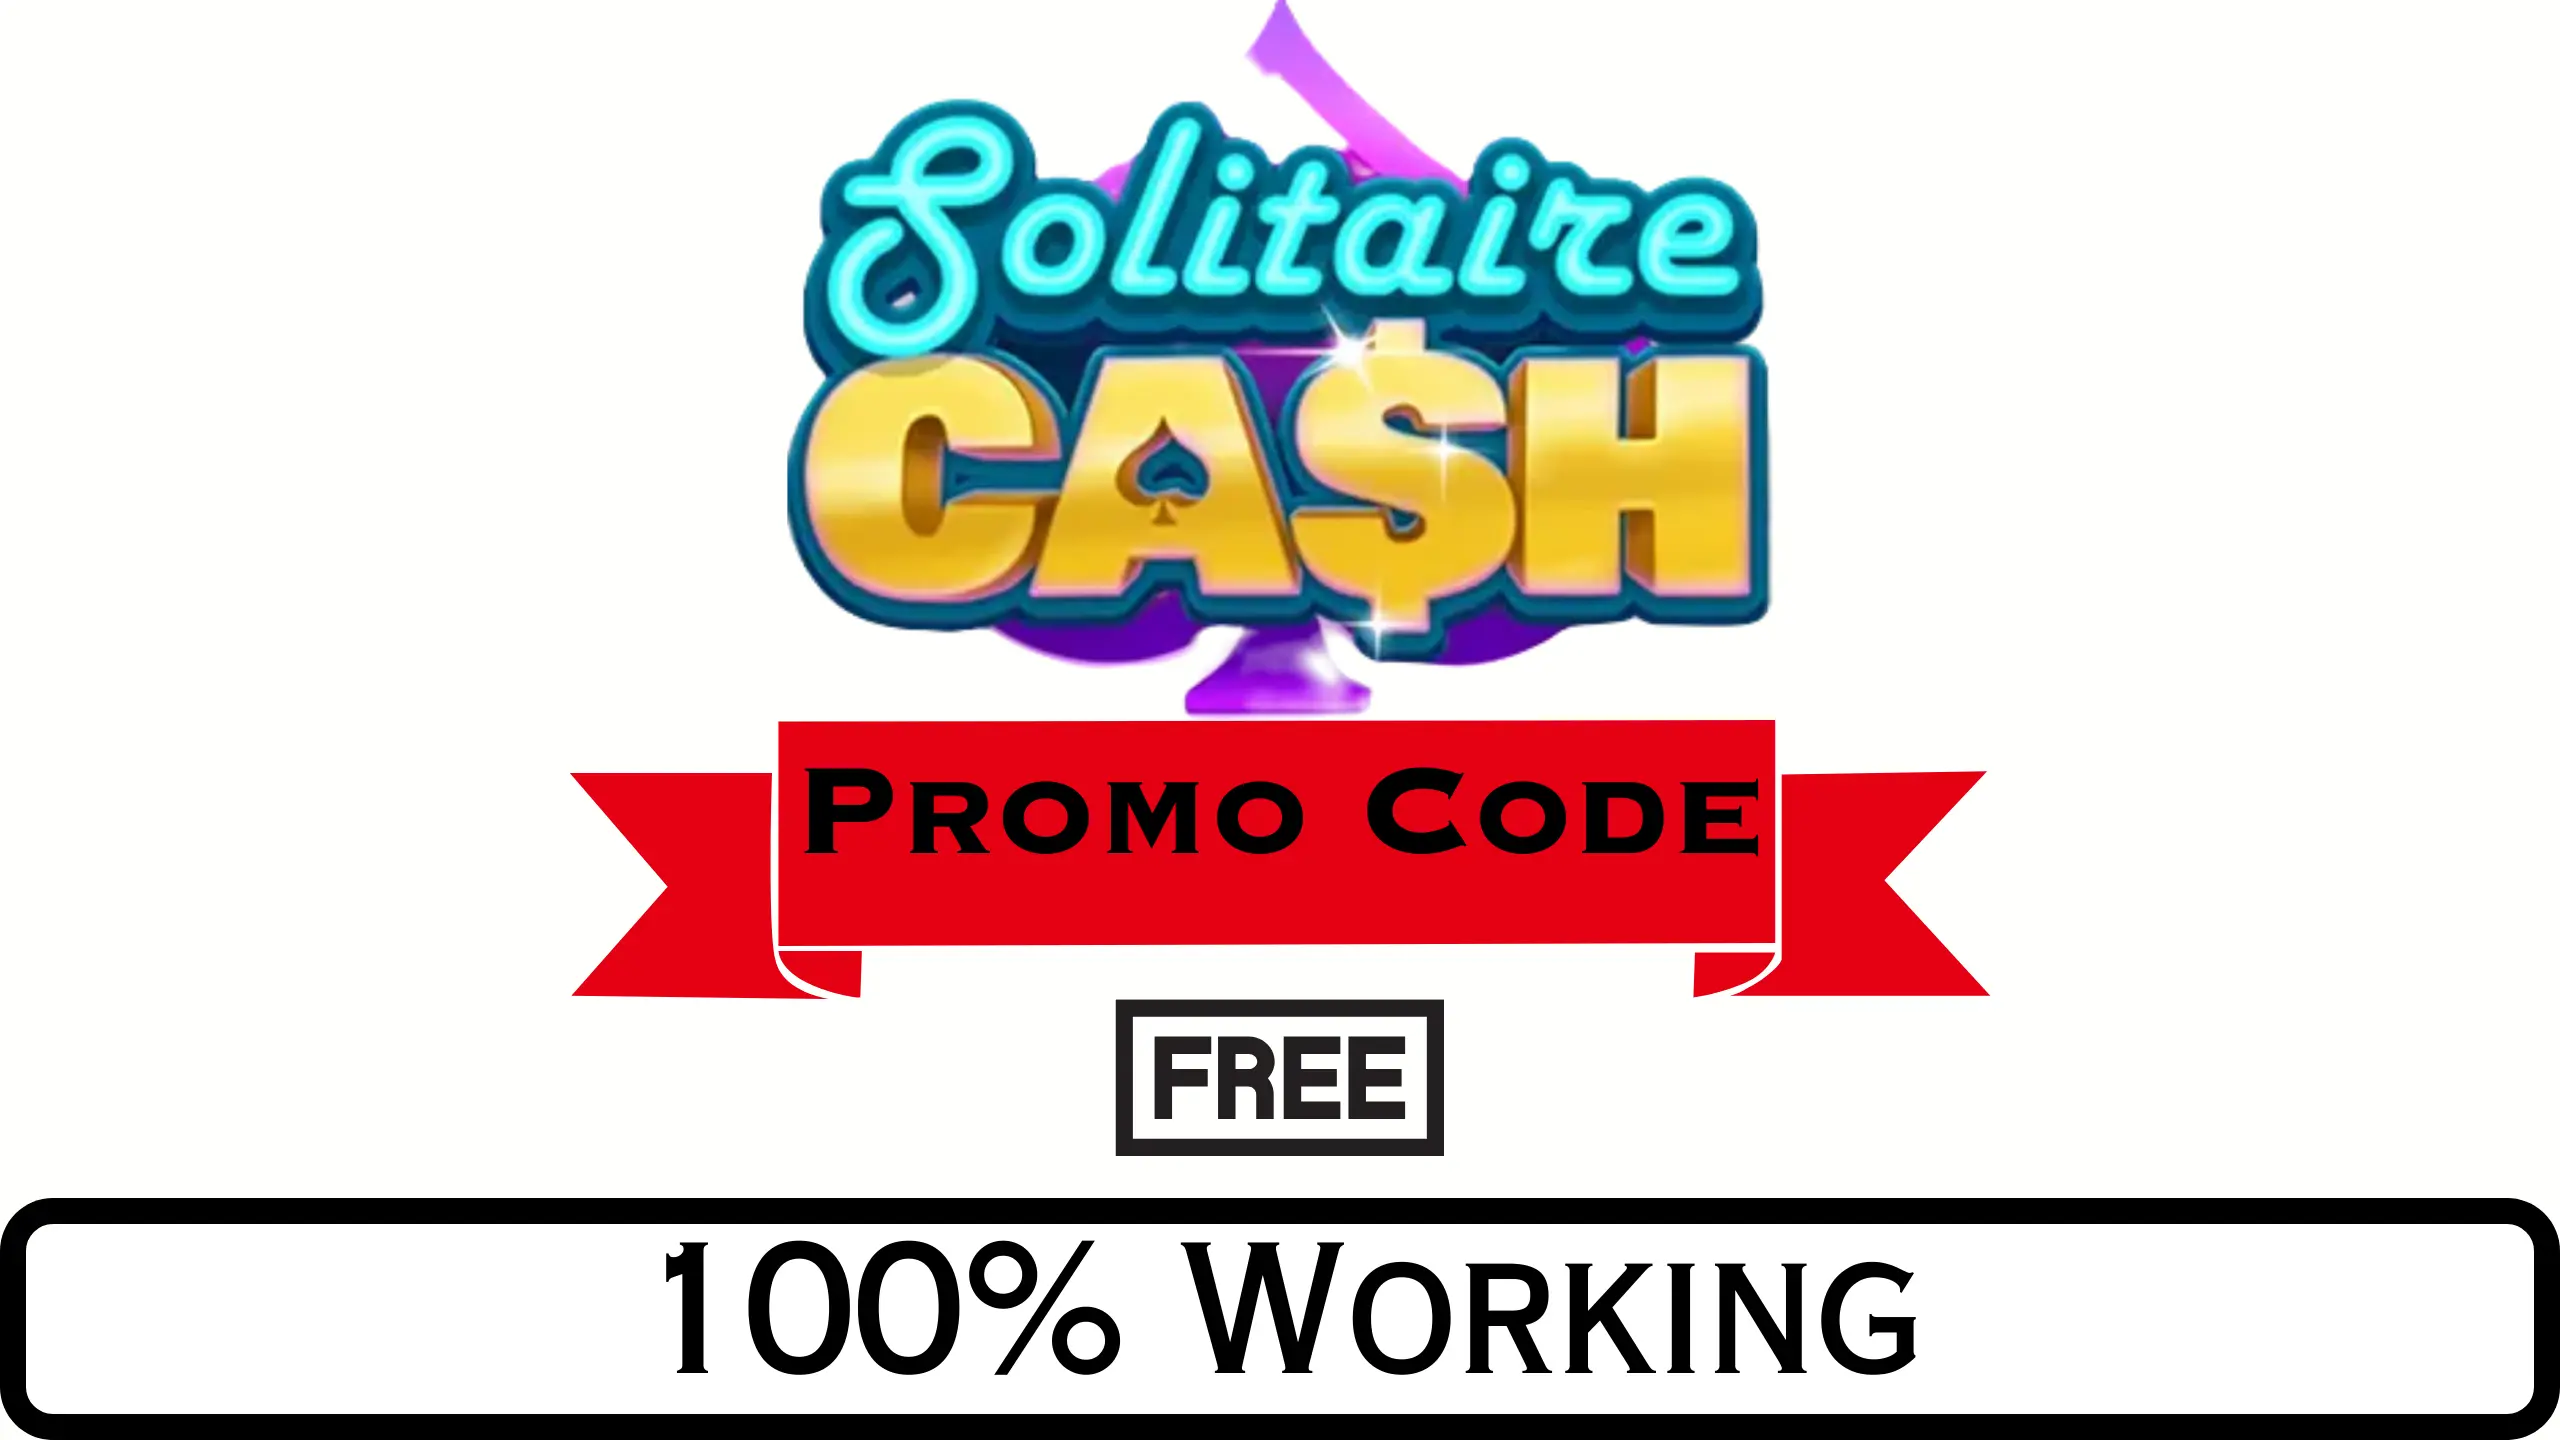 Solitaire Clash Promo Code: KVNTMVe : r/PromoCodeShare